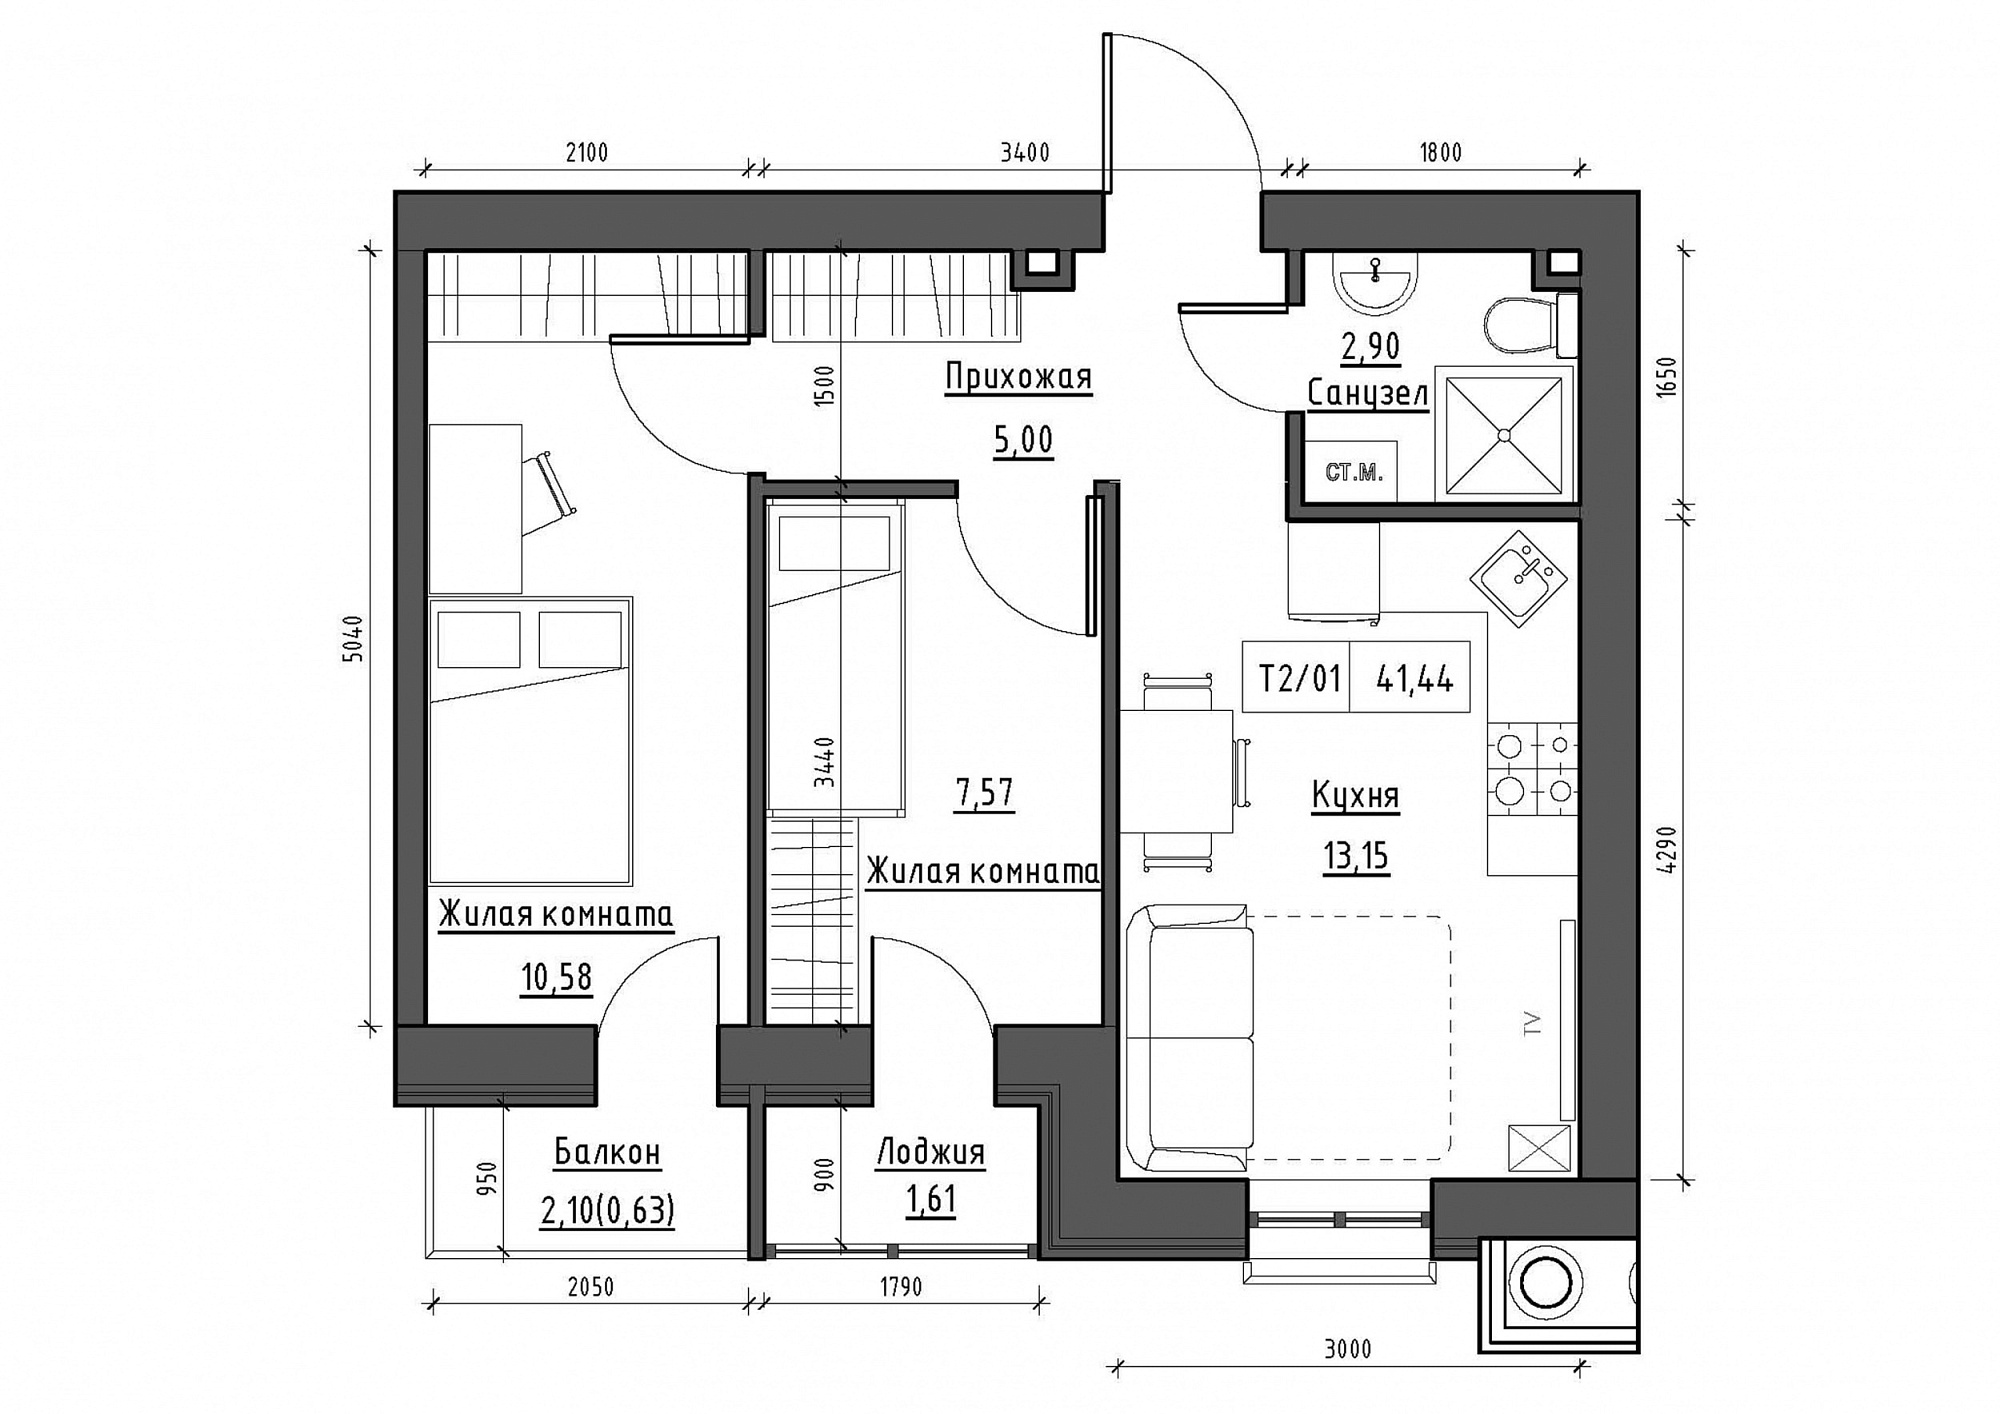 Planning 2-rm flats area 41.44m2, KS-011-03/0011.